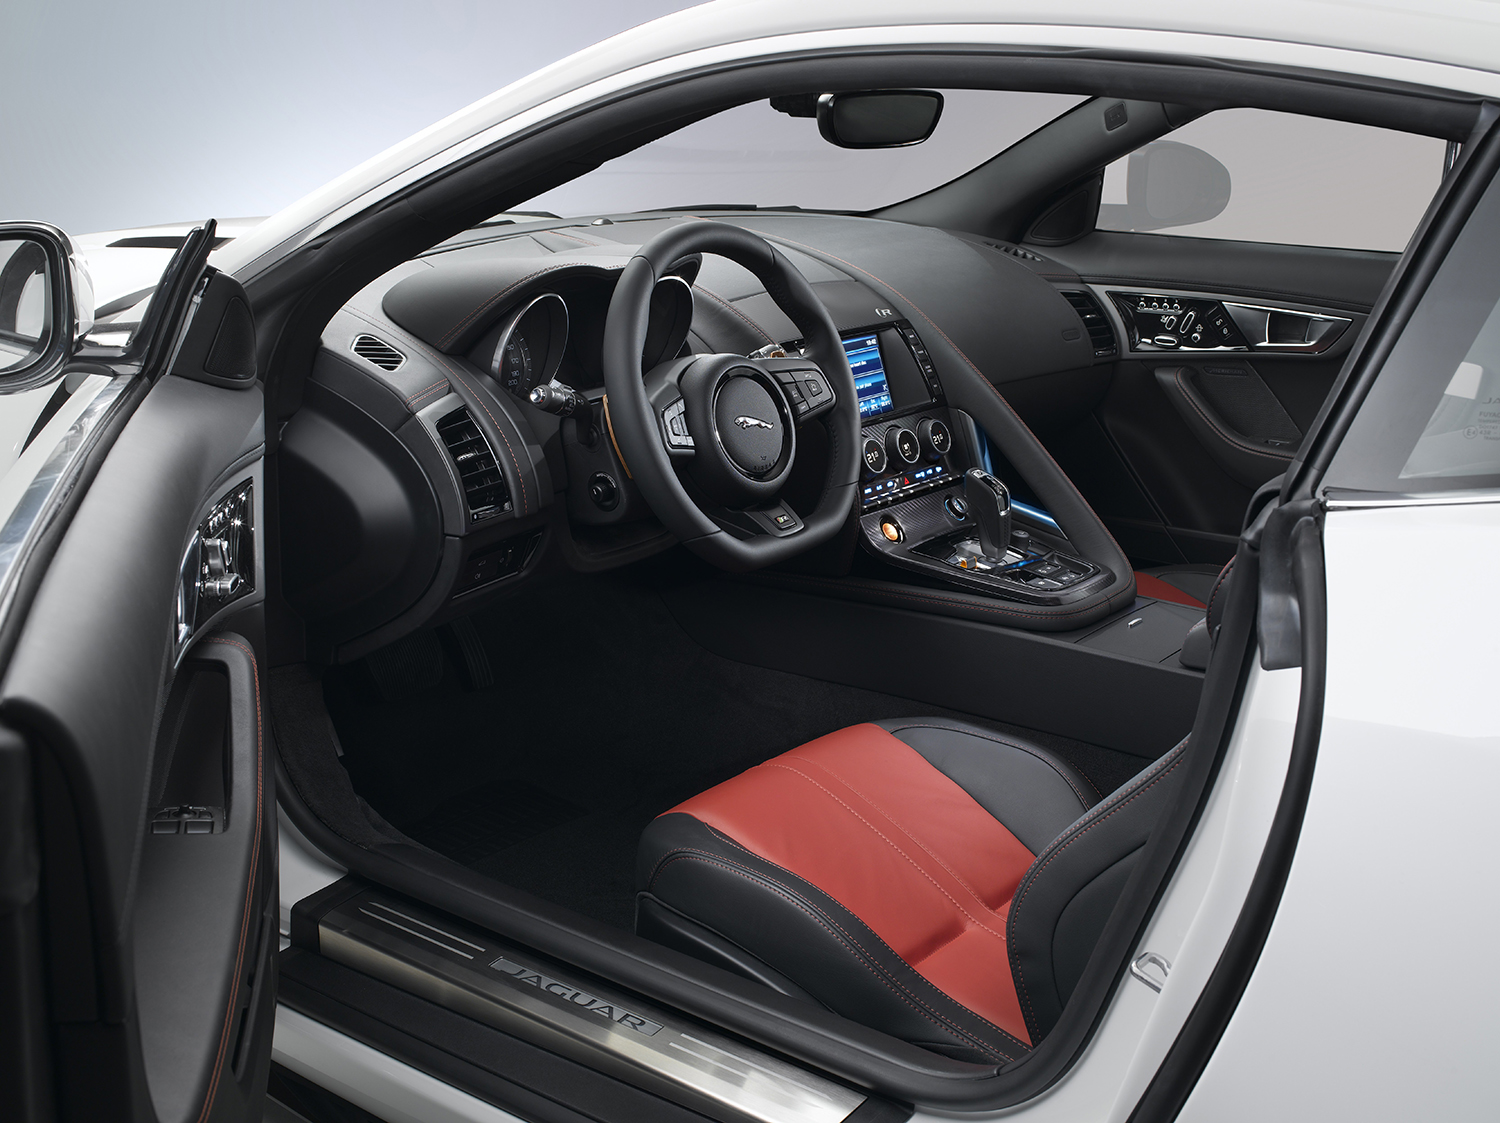 Jaguar F-Type Coupe interior 2014